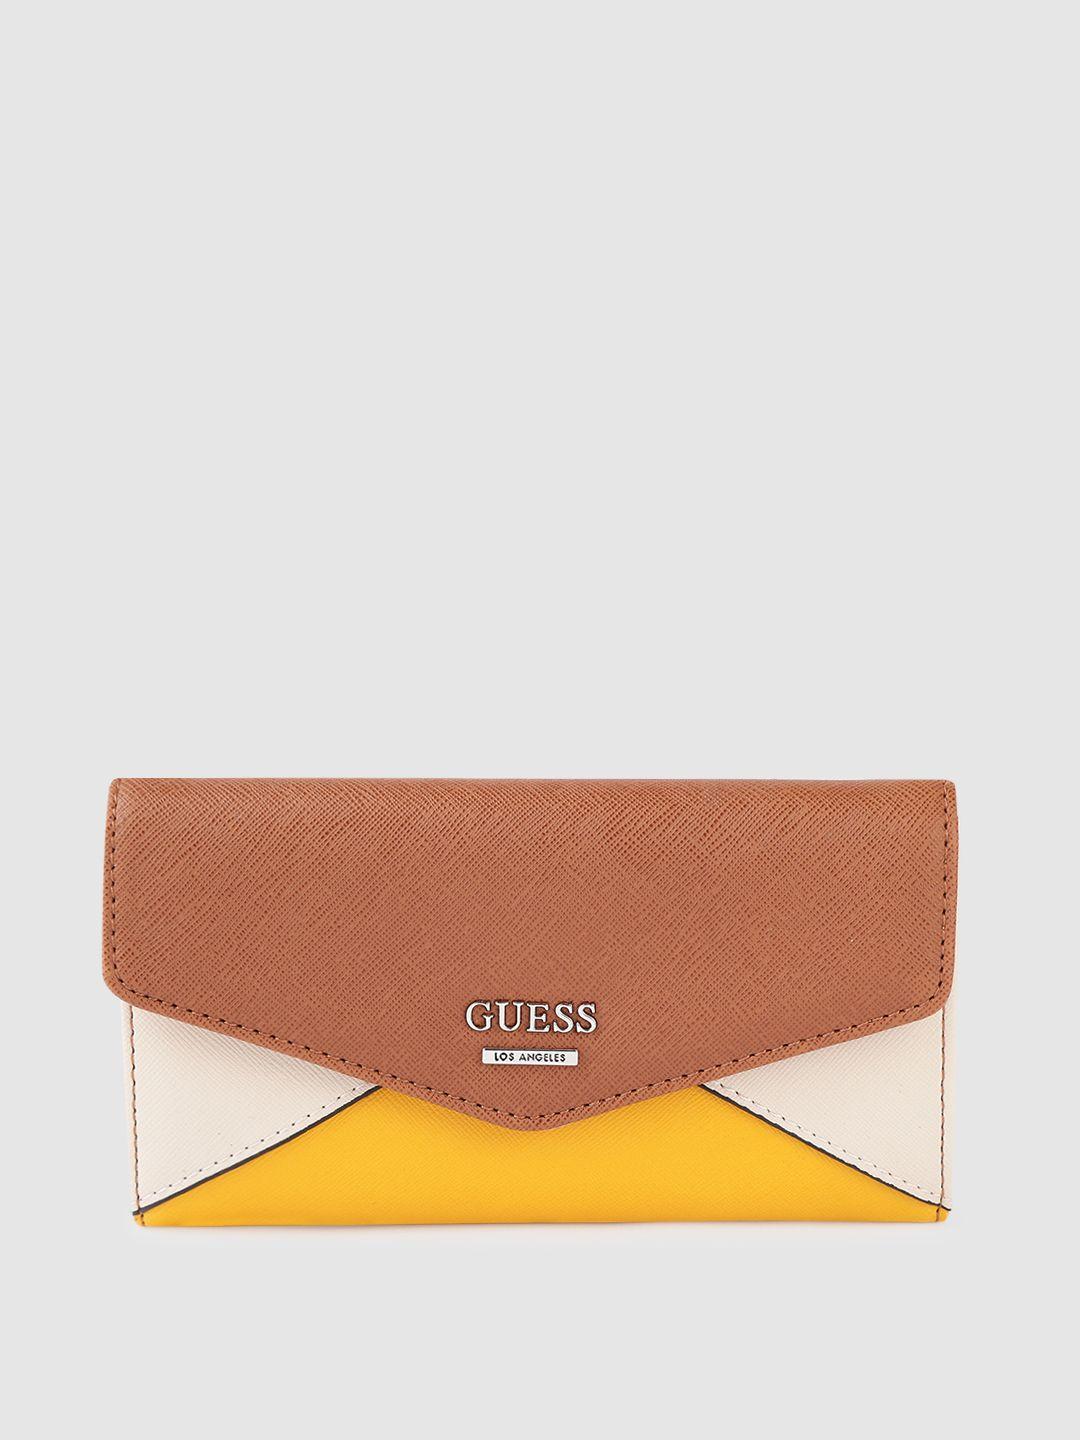 guess women tan brown & mustard yellow colourblocked saffiano textured three fold wallet